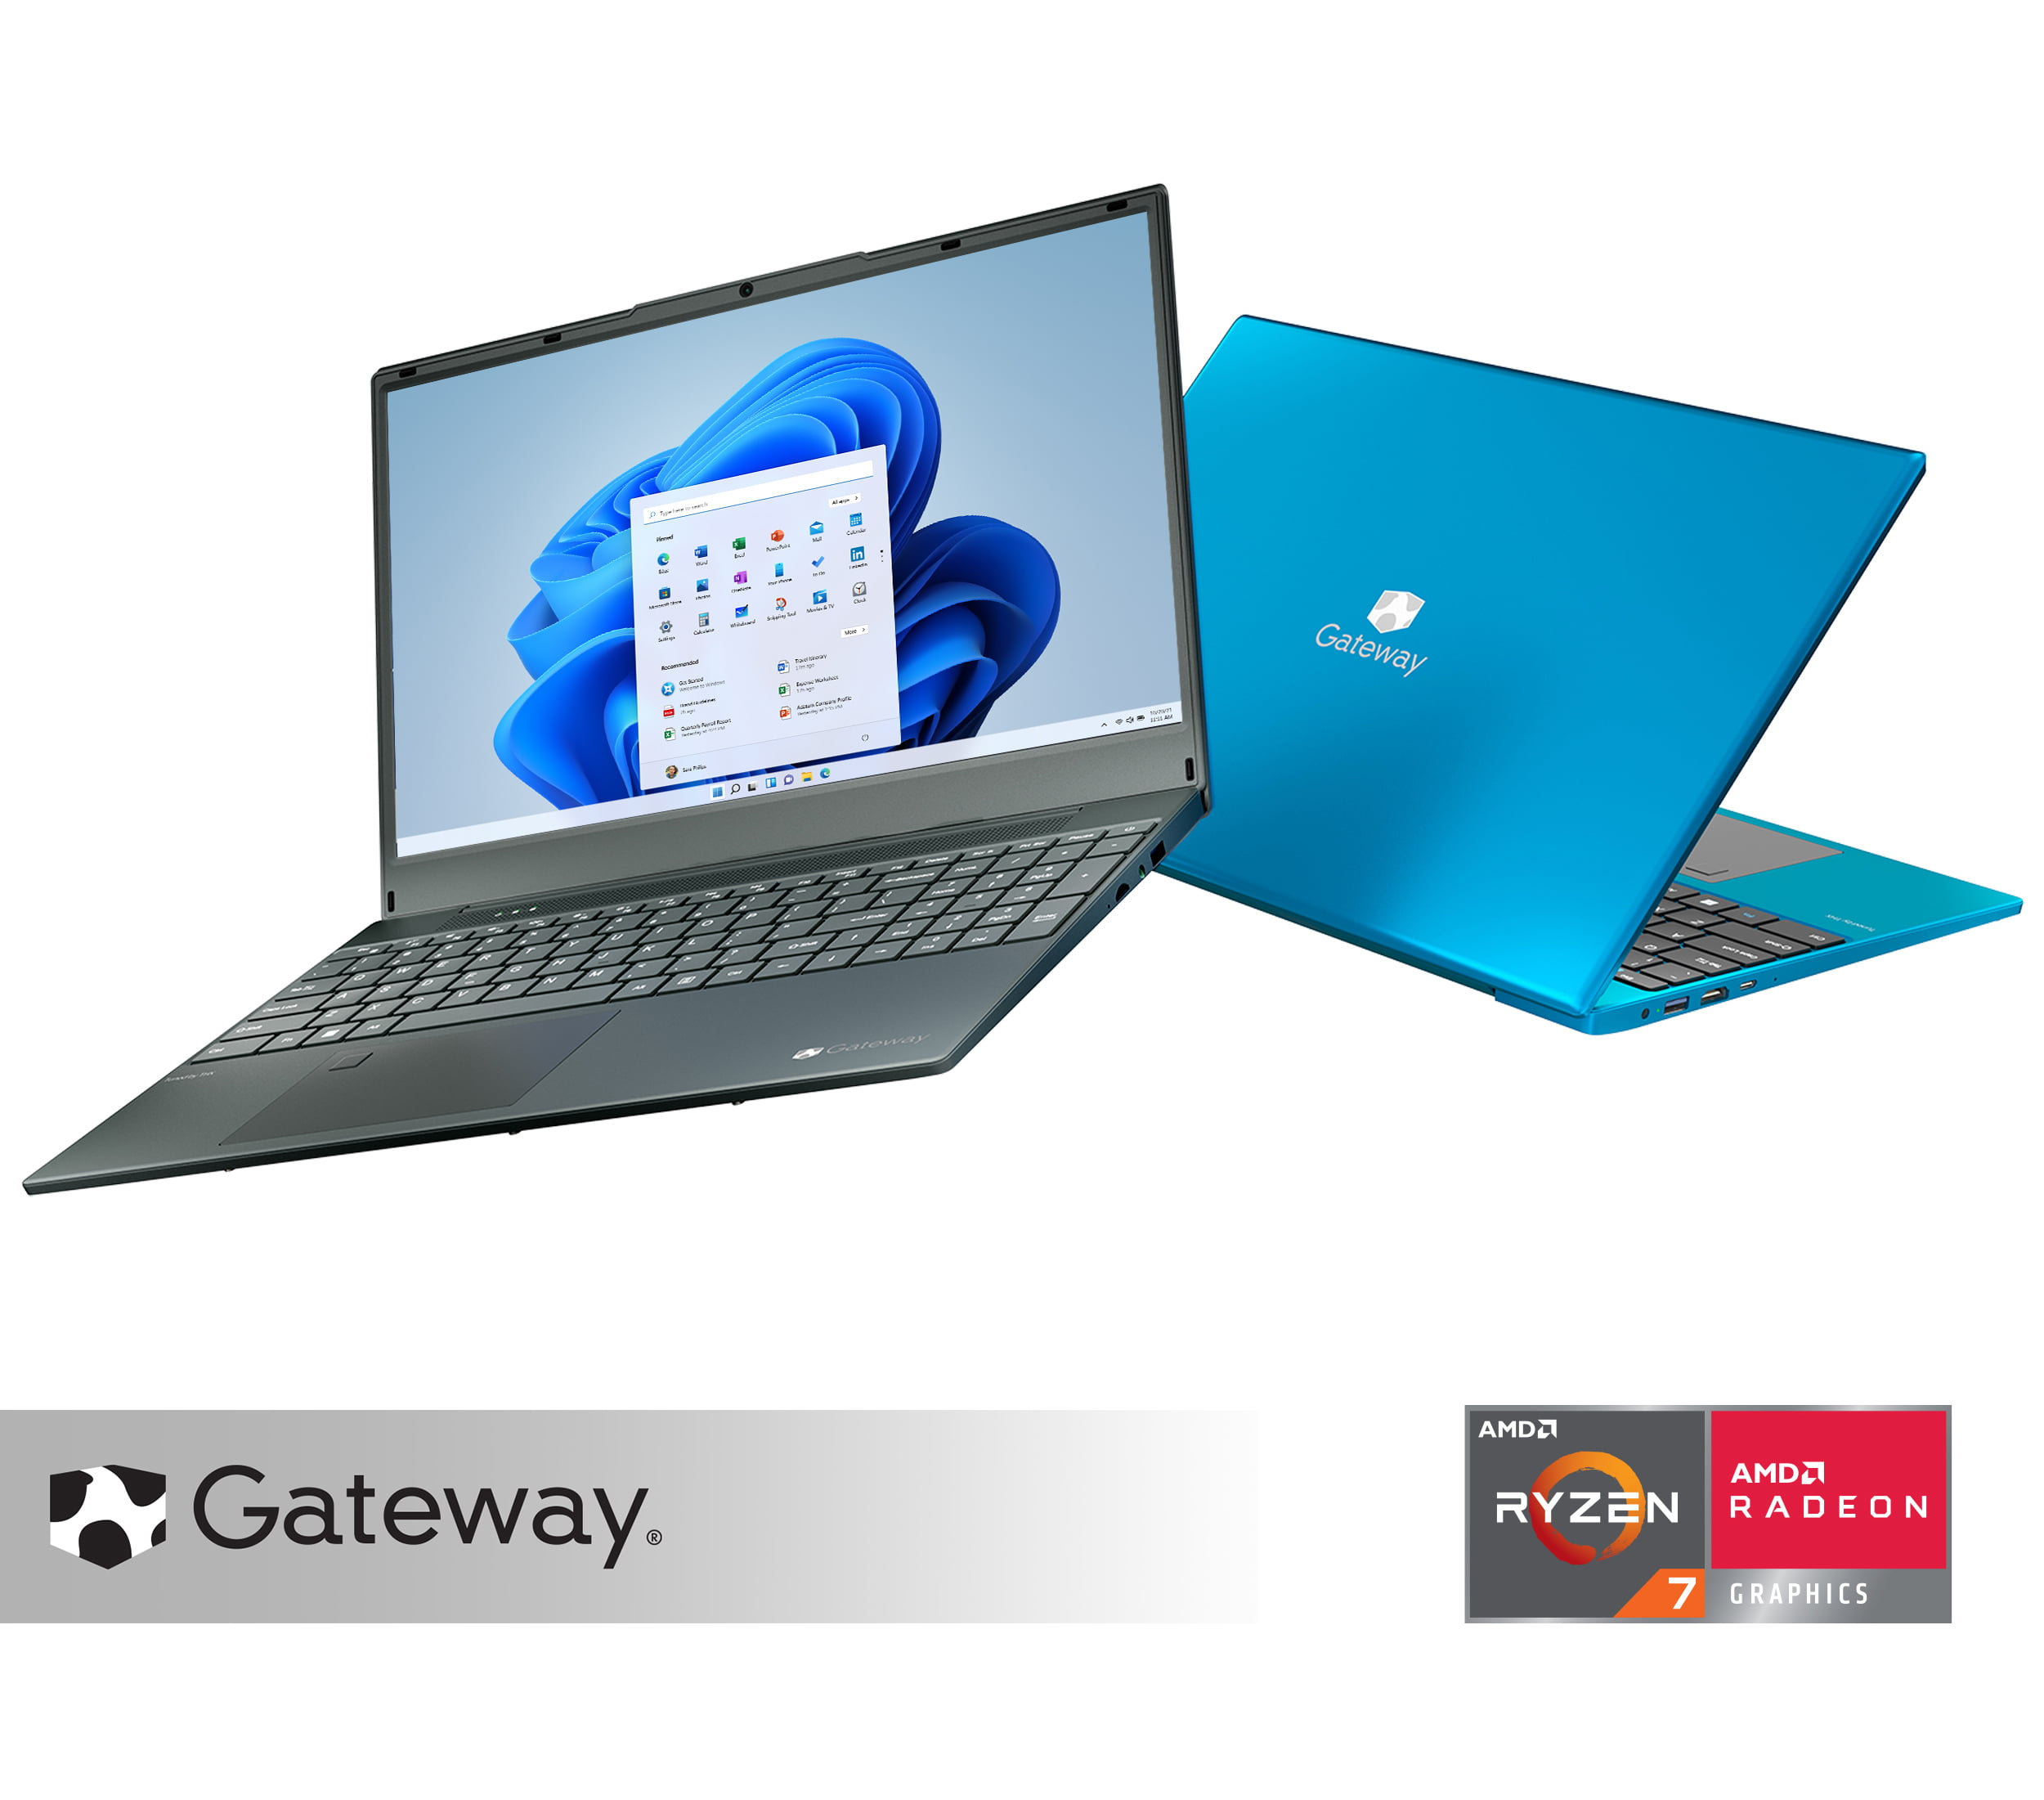 Gateway 15.6" Ultra Slim Notebook, FHD, AMD Ryzen 7 with Radeon RX Vega 10 Graphics, 512GB SSD, 8GB Memory $249